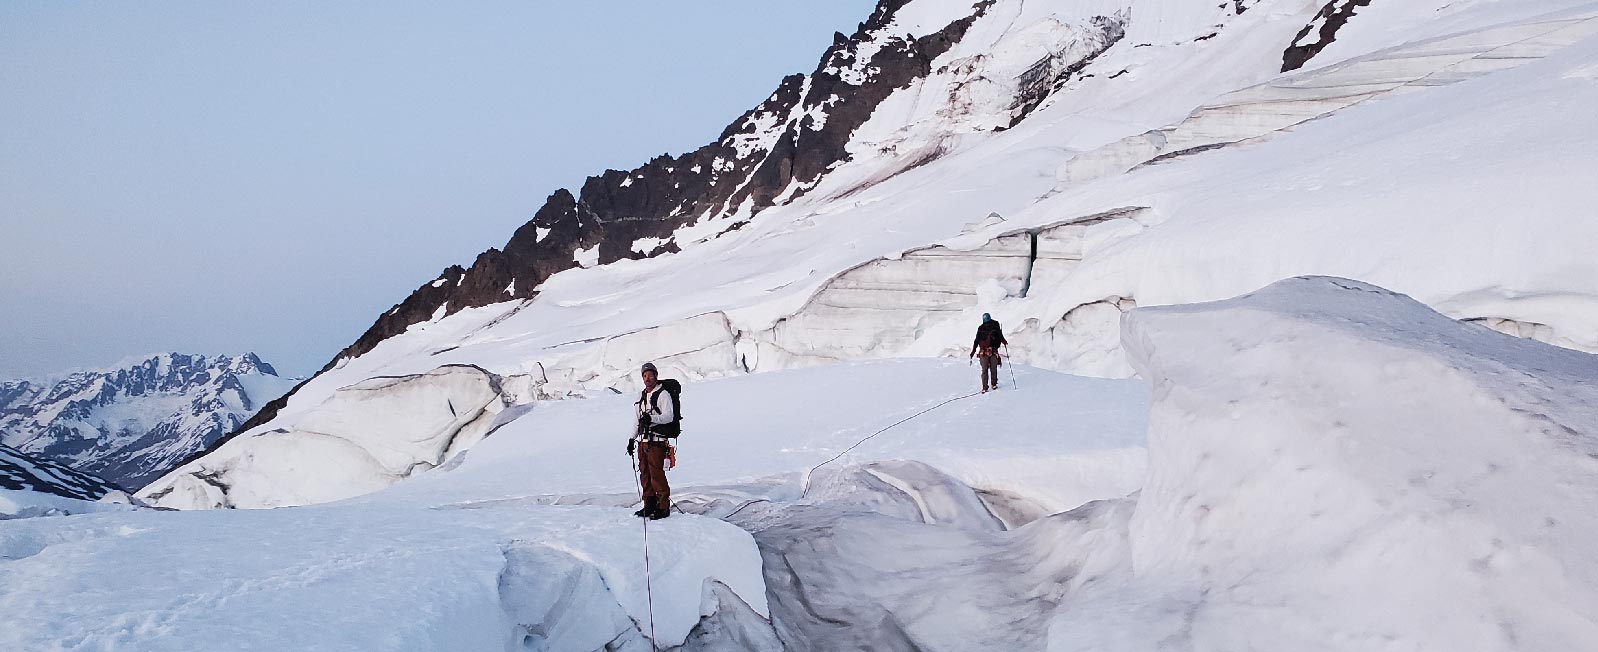 Climbers descend a snowy peak near a crevasse